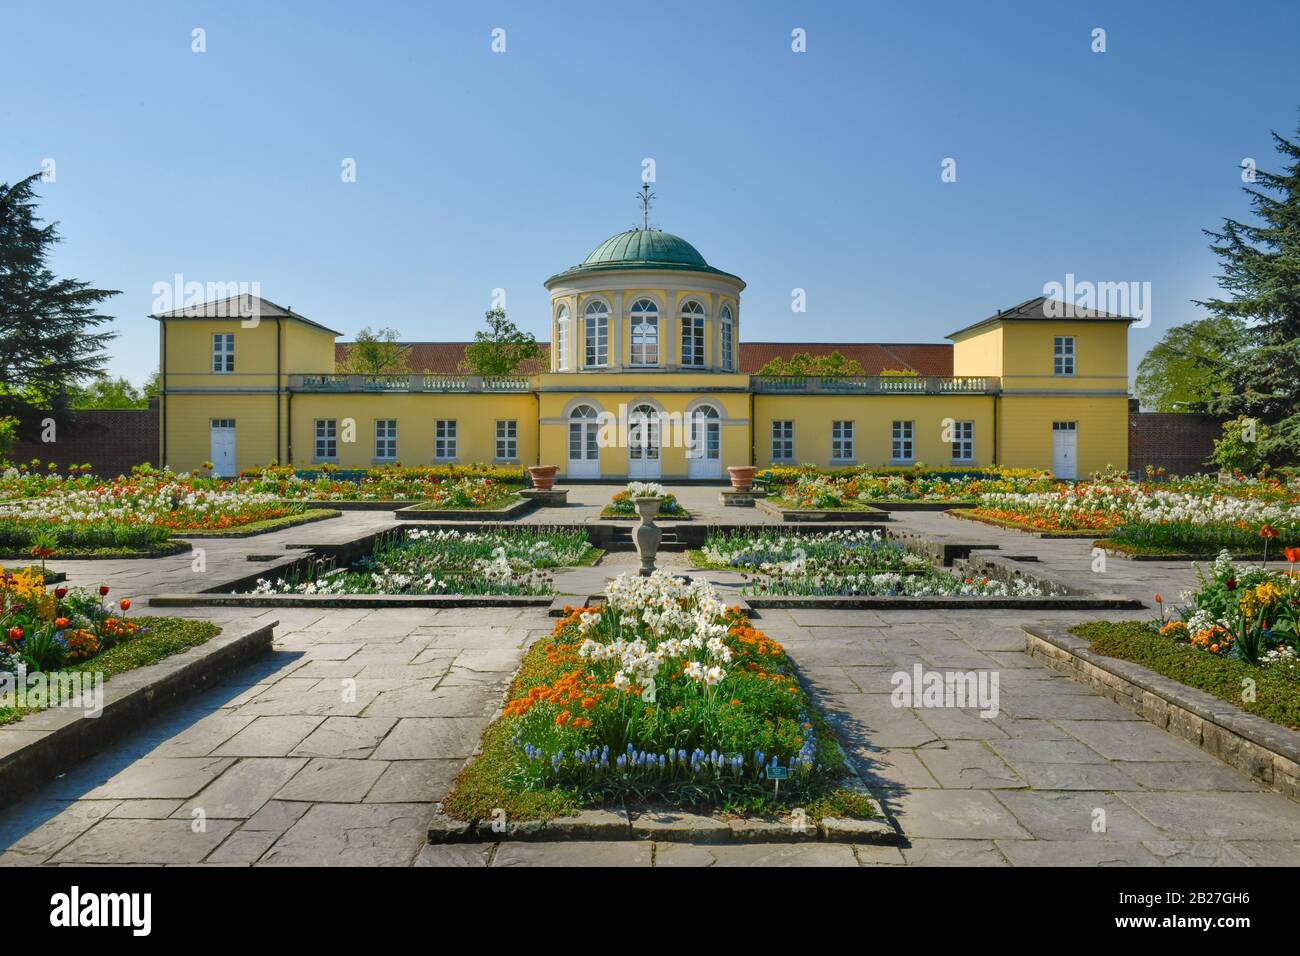 Bibliothekspavillon, Berggarten, Herrenhäuser Gärten, Hannover, Niedersachsen, Deutschland Foto Stock